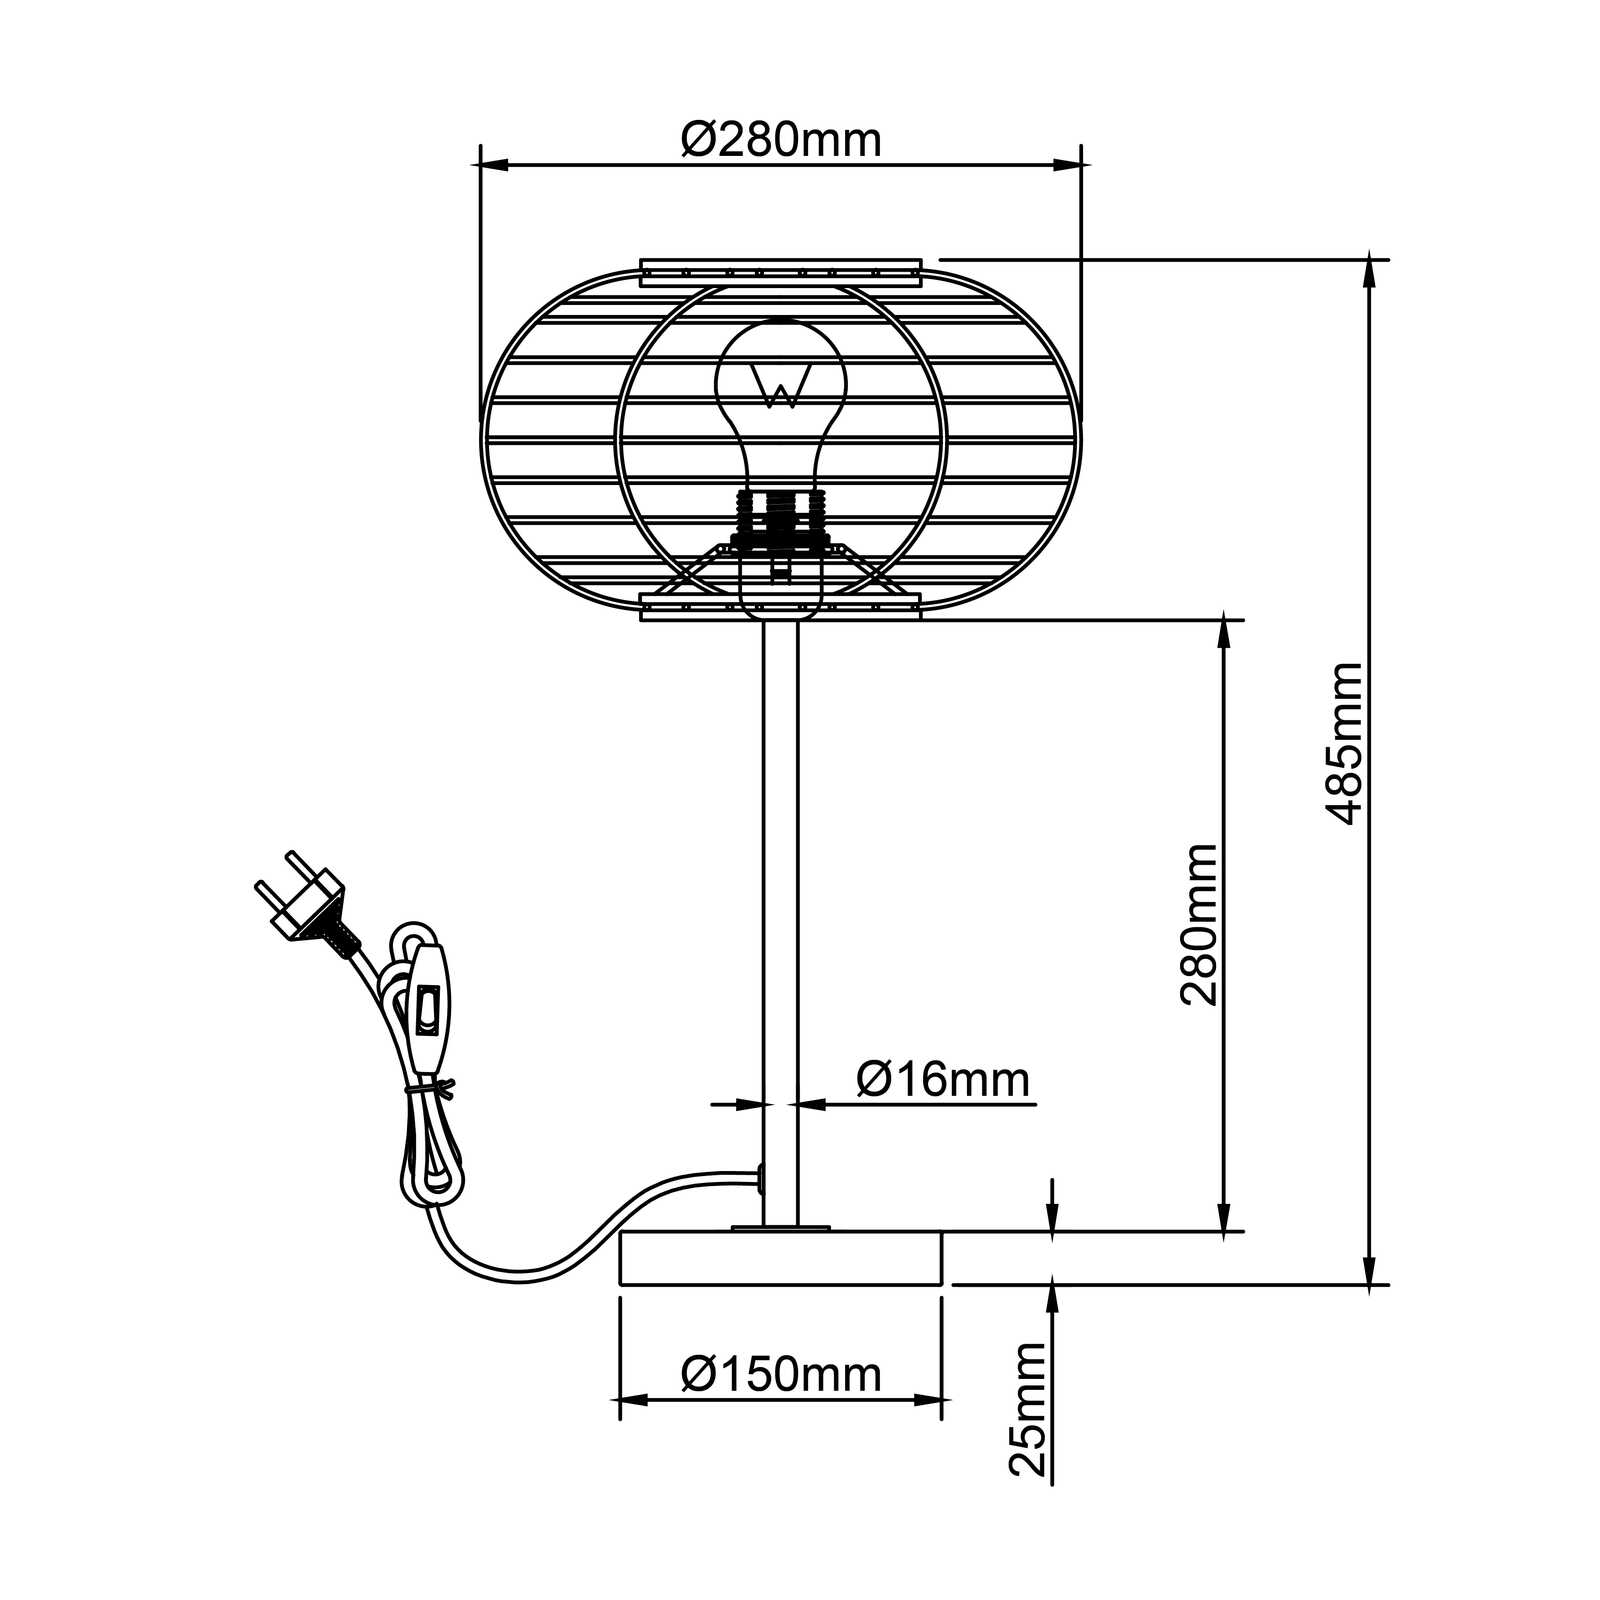             Metalen tafellamp - Viktor 2 - Bruin
        